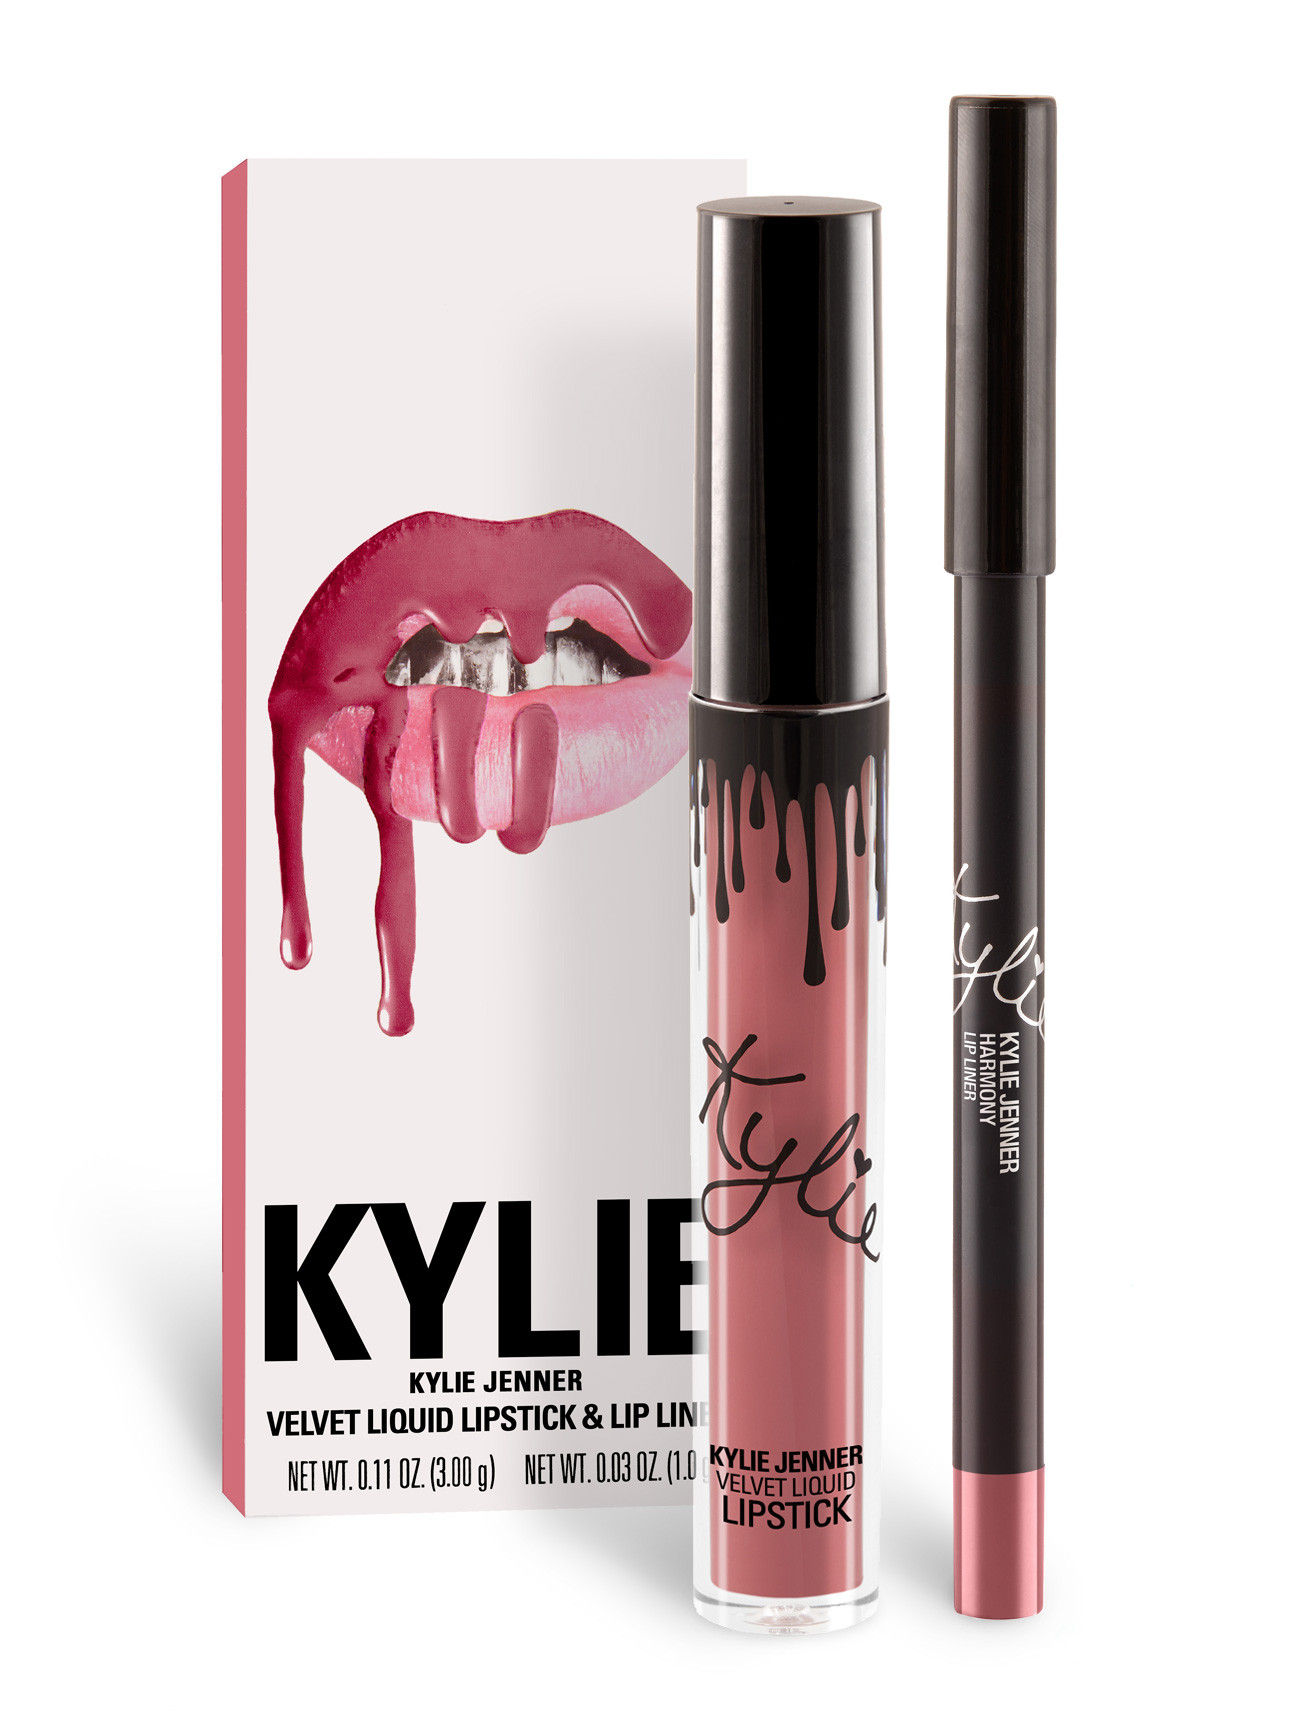 Kylie Cosmetics Harmony Velvet Liquid Lipstick Dupes - All In The Blush